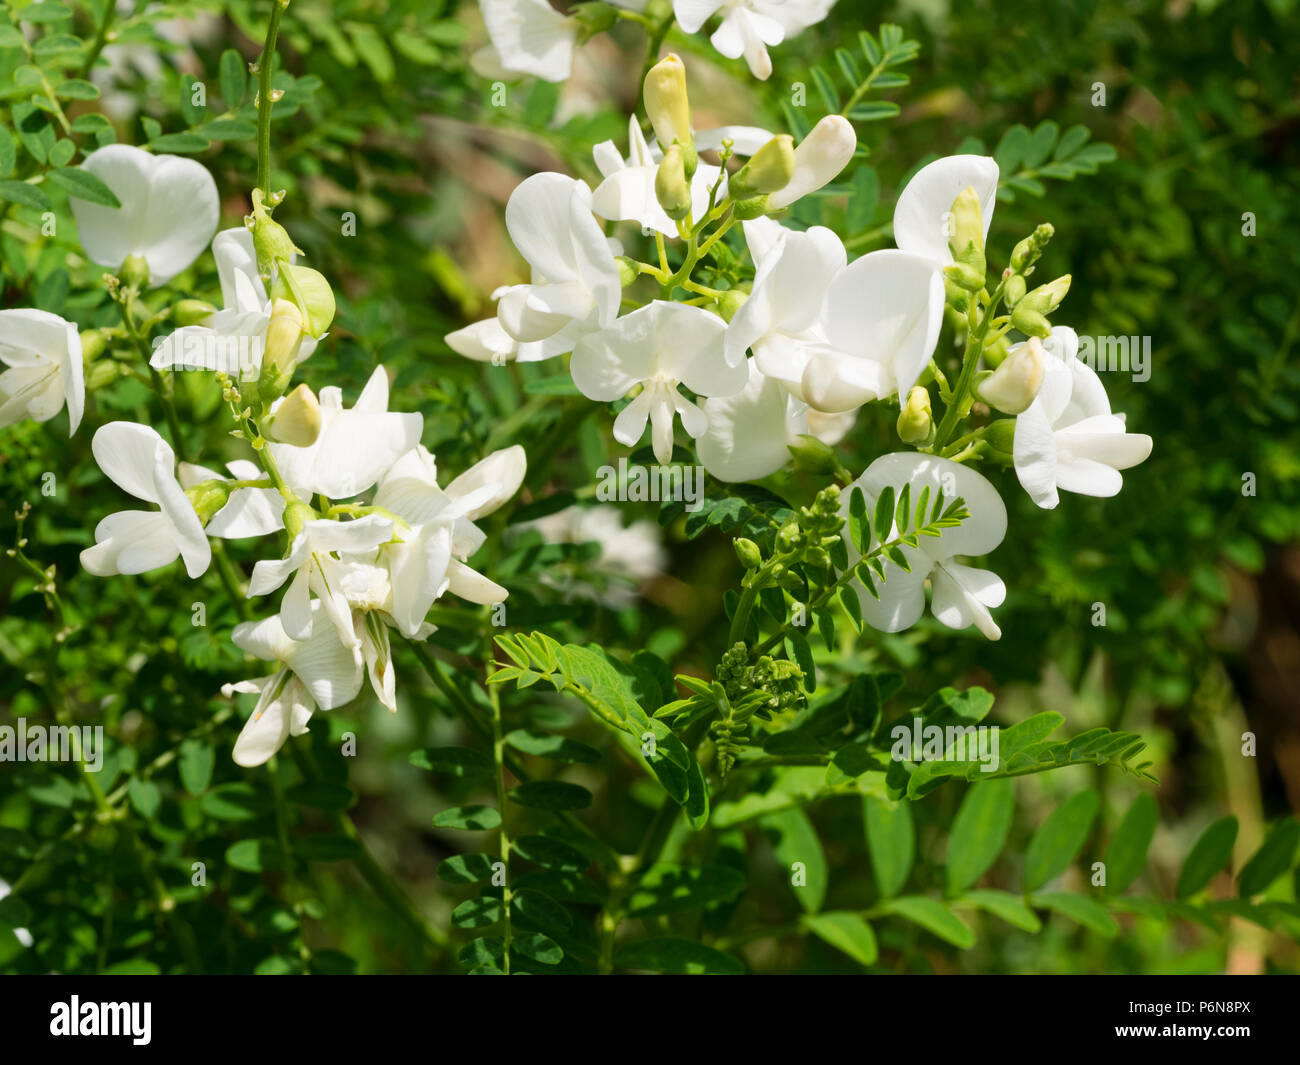 White pea flowers of the tender Australian perennial Darling pea, Swainsona galegifolia 'Alba' Stock Photo